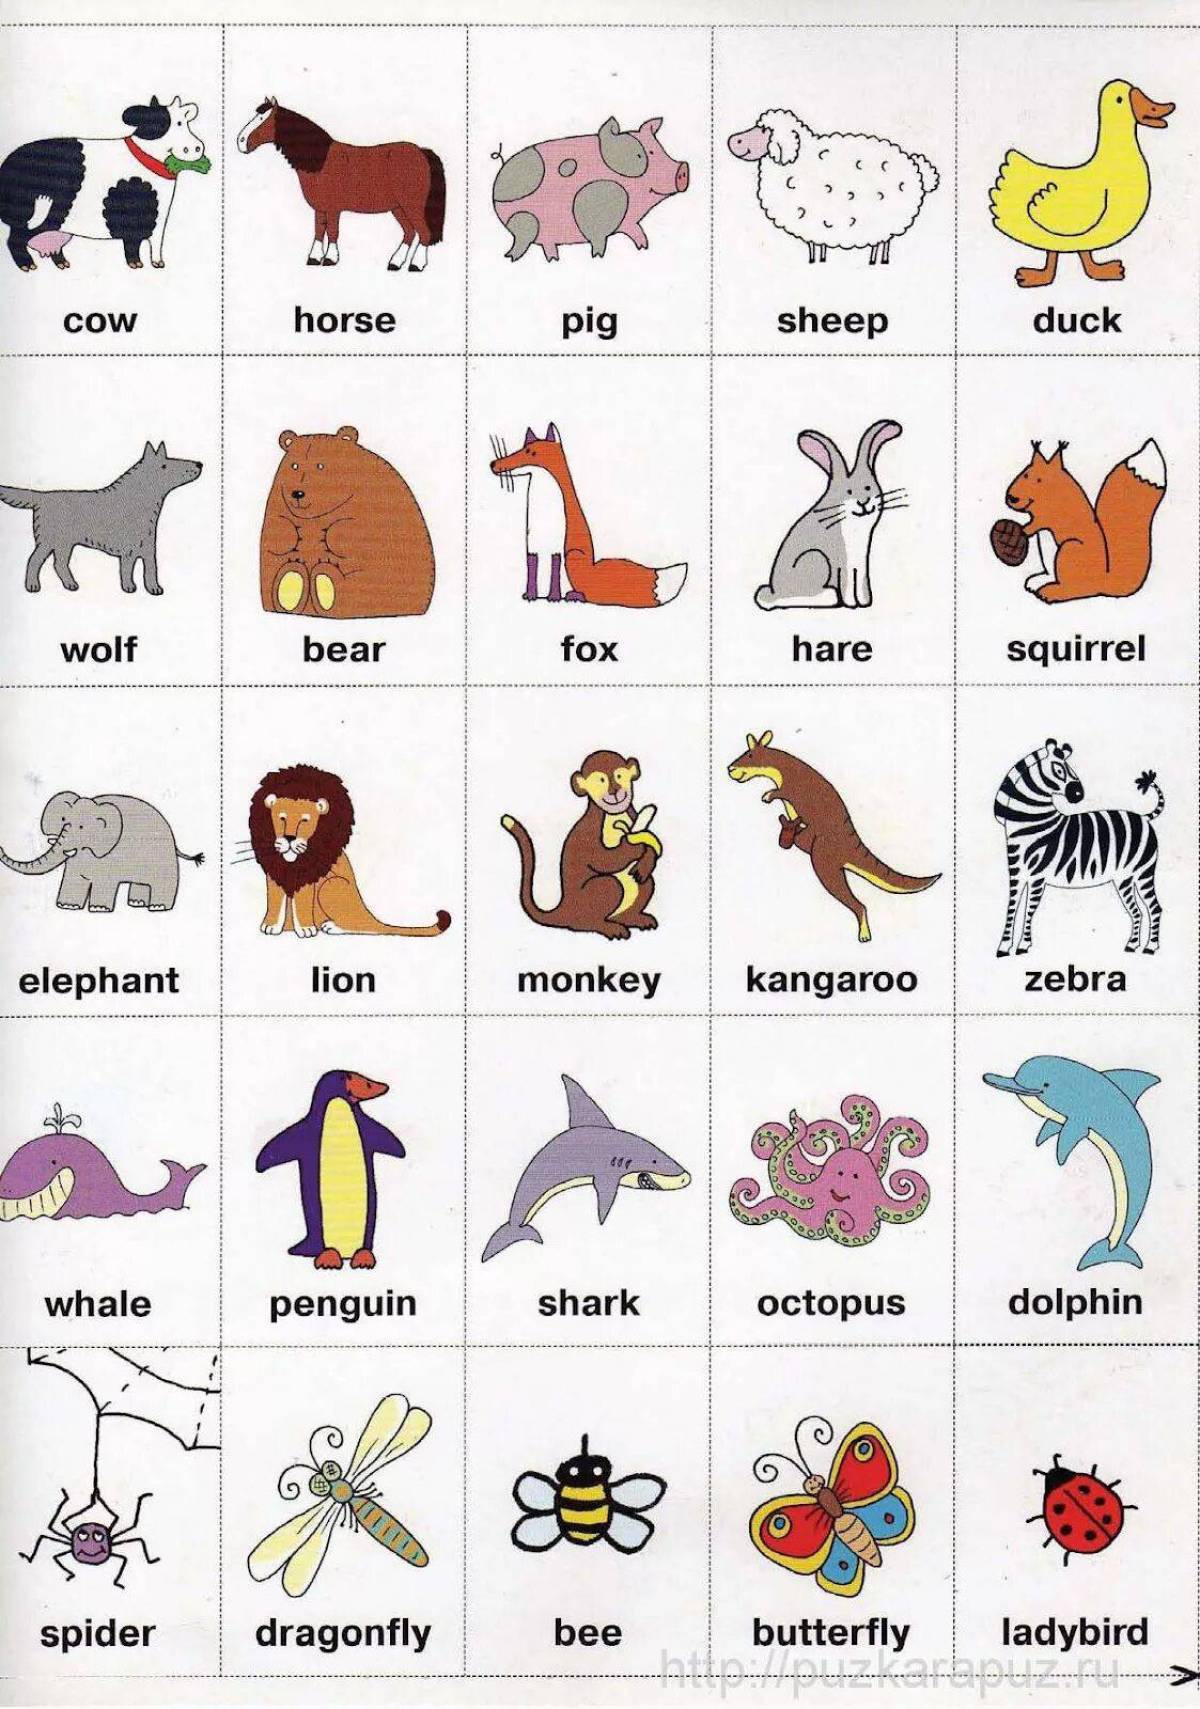 Английский 2 класс тема животных. Животные на английском. Животные нкаанлийском. Животные на английском для детей. Животрве РП английском.